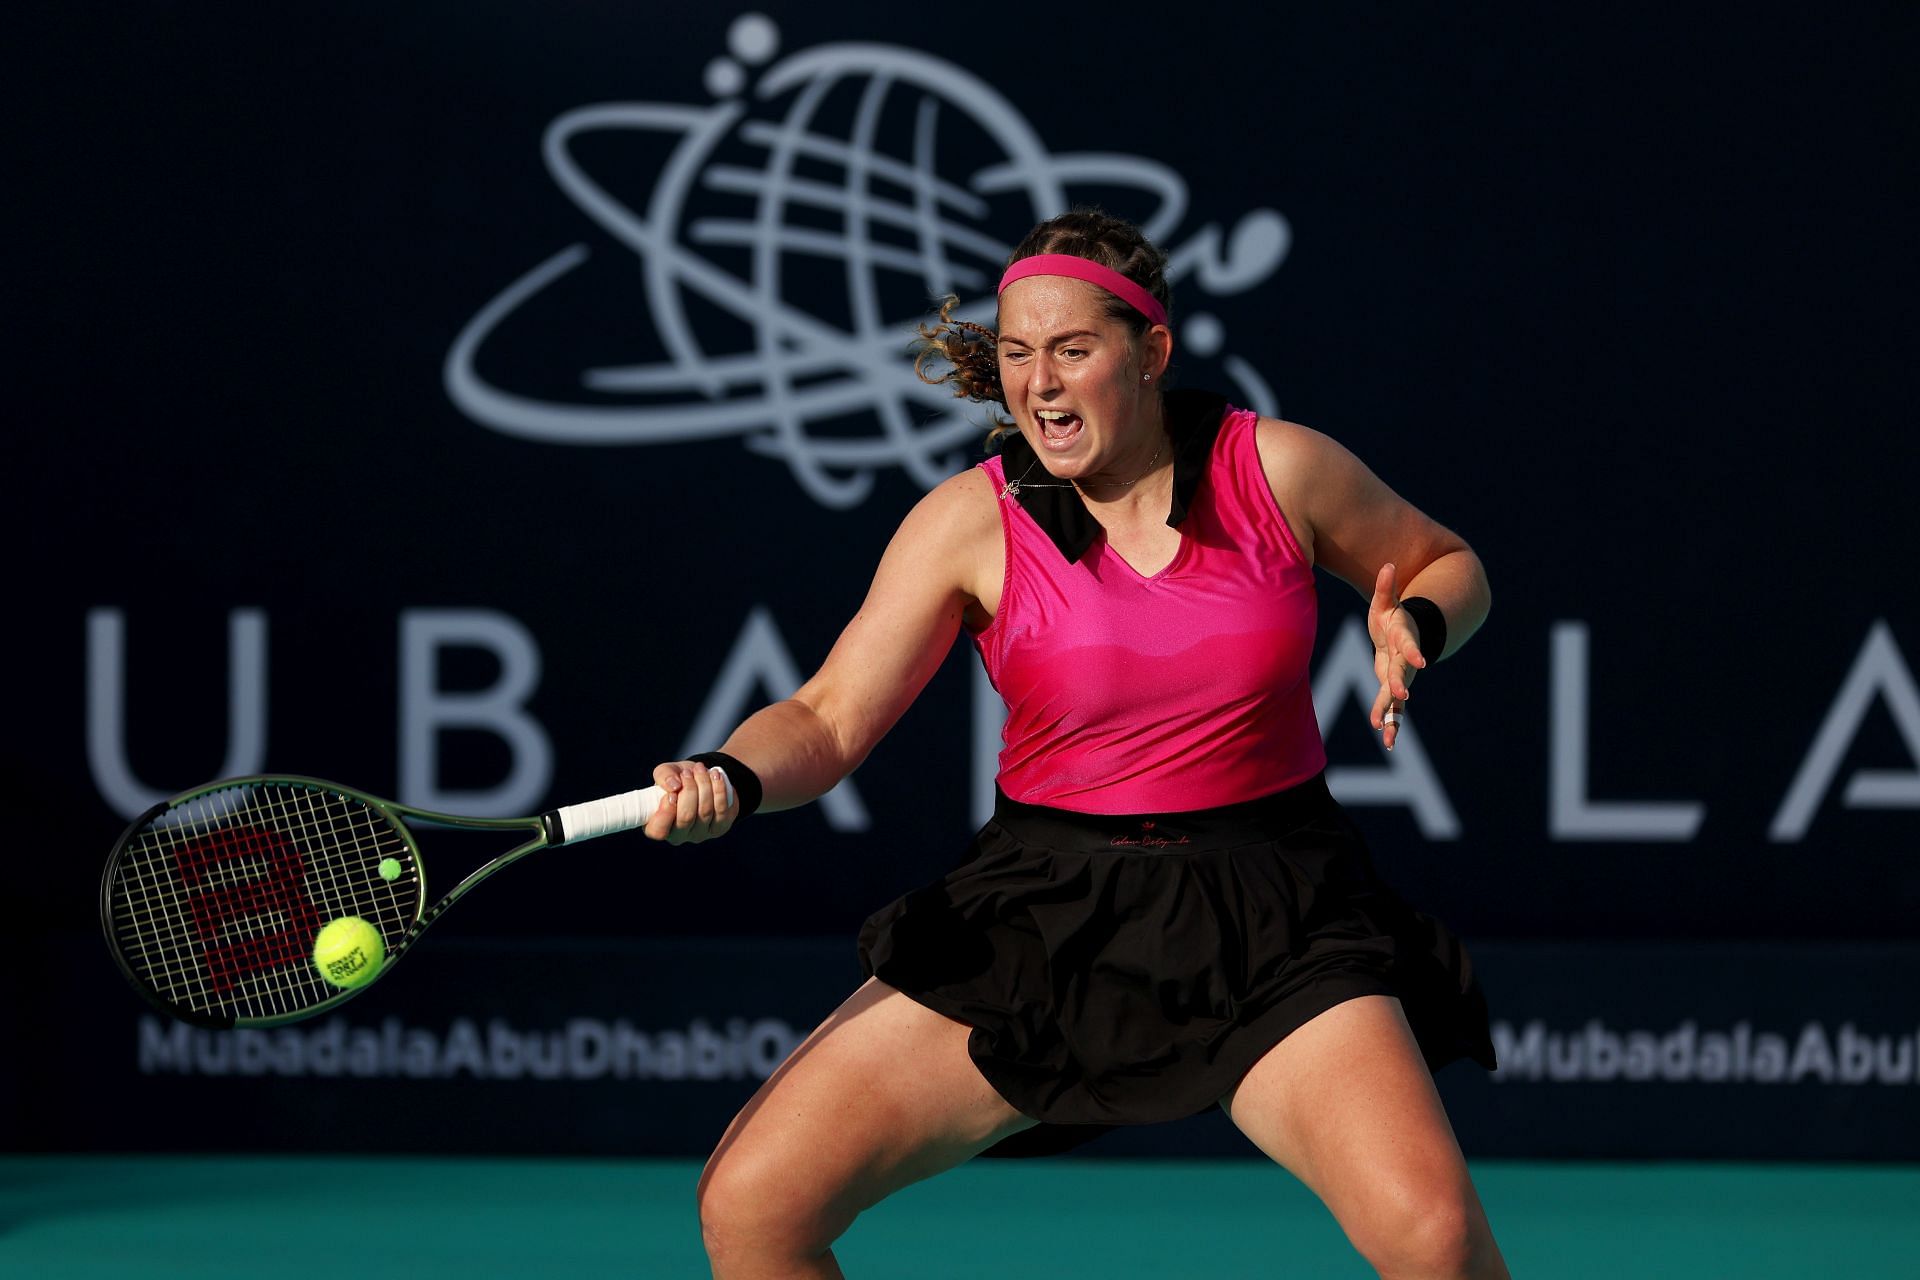 Jelena Ostapenko in action at the 2023 Mubadala Abu Dhabi Open